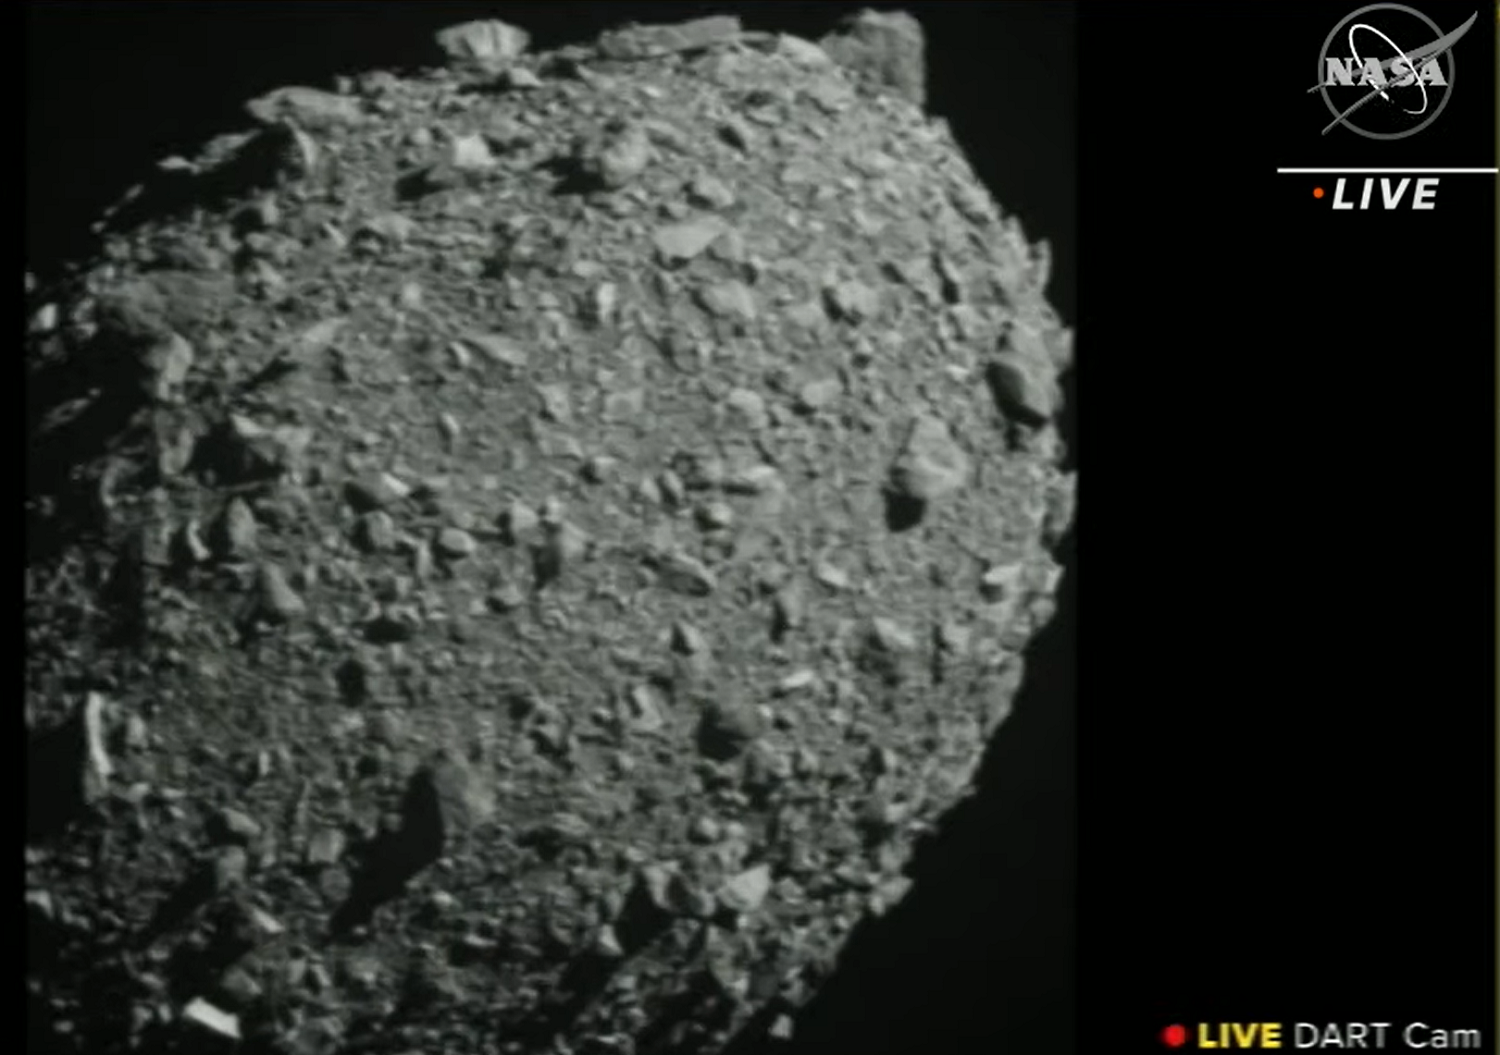 NASA Live TV airs DART close-up of Dimorphos asteroid